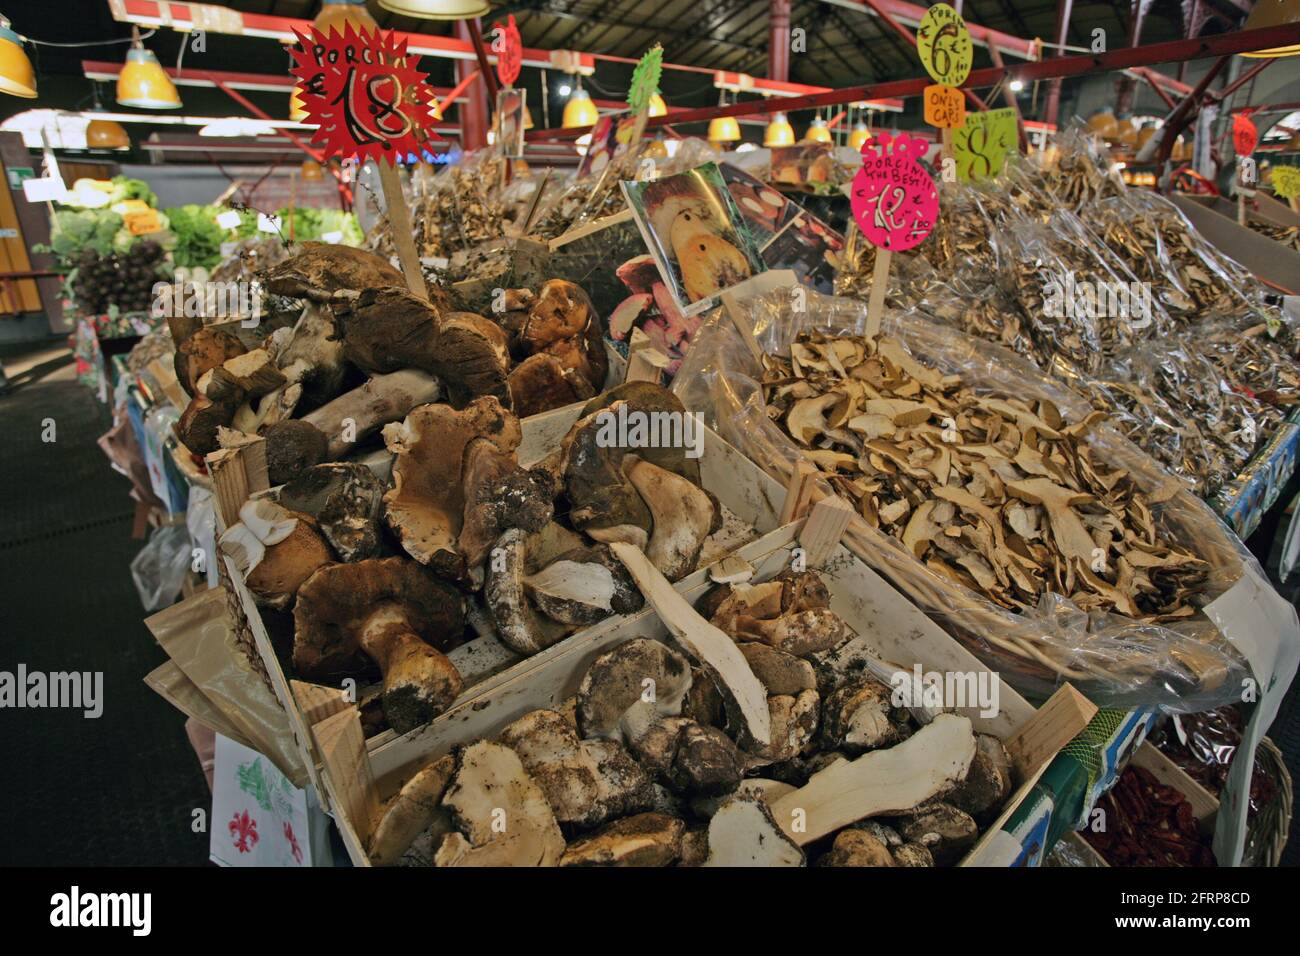 Porcini mushrooms, Mushroom stall, Mercato Centrale, central market hall, centro storico, Florence, Italy Stock Photo